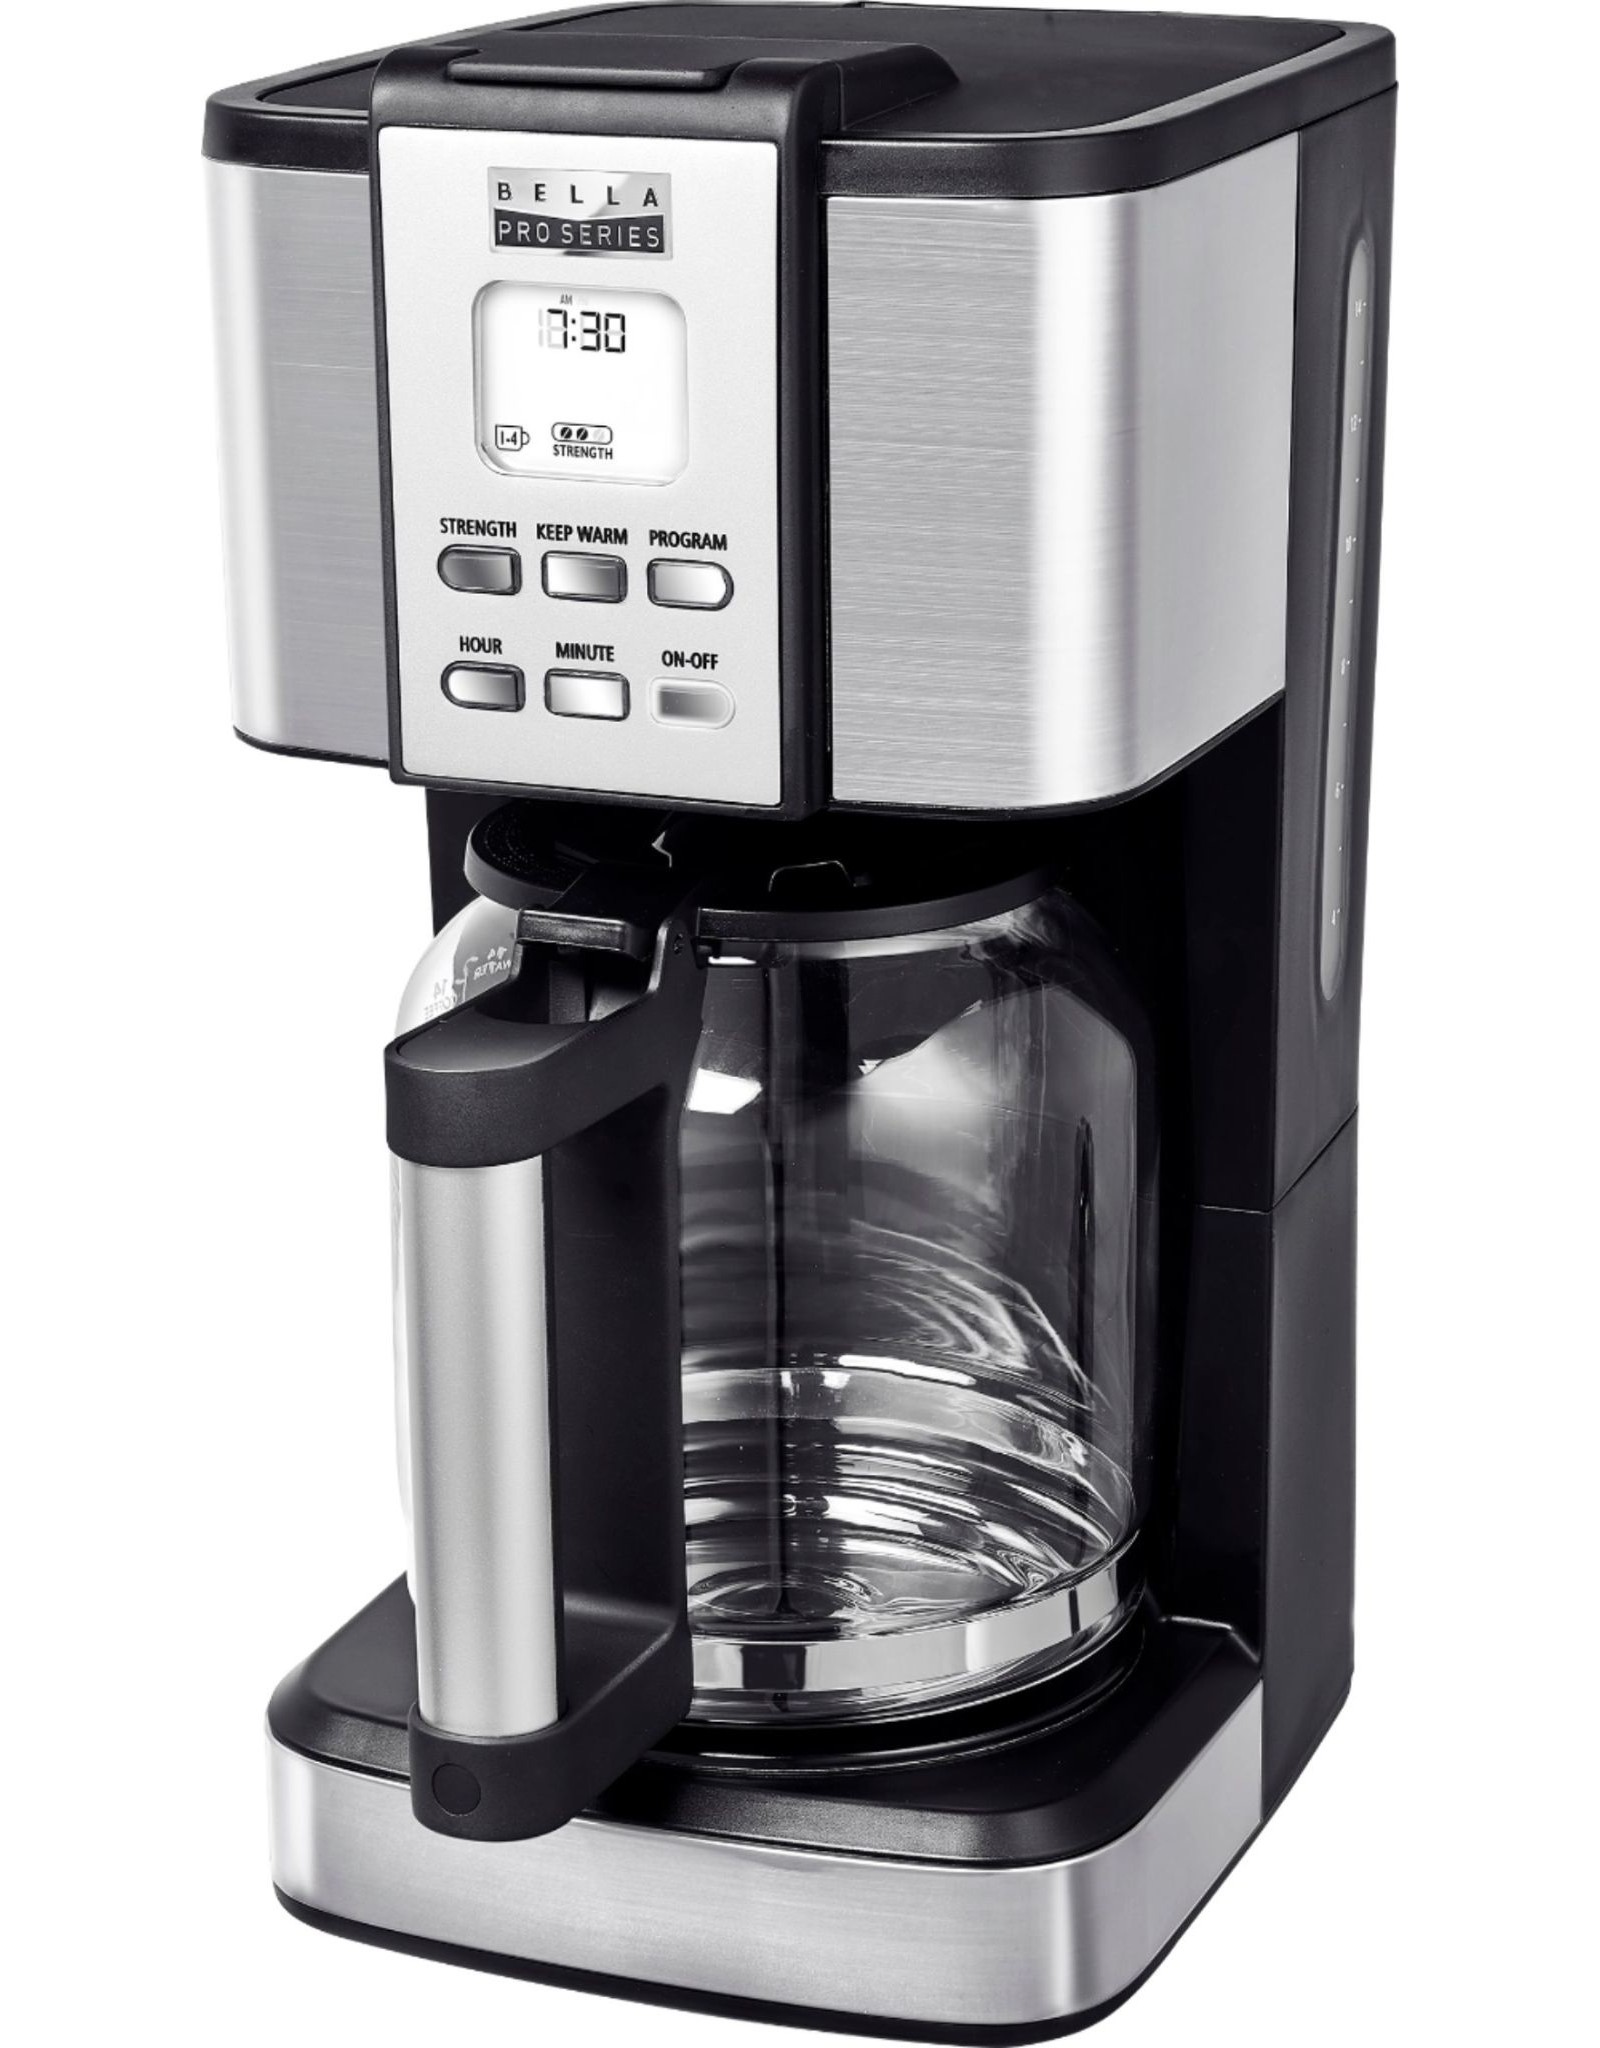 Bella pro 90074 Bella - Pro Series 14-Cup Coffeemaker - Stainless Steel